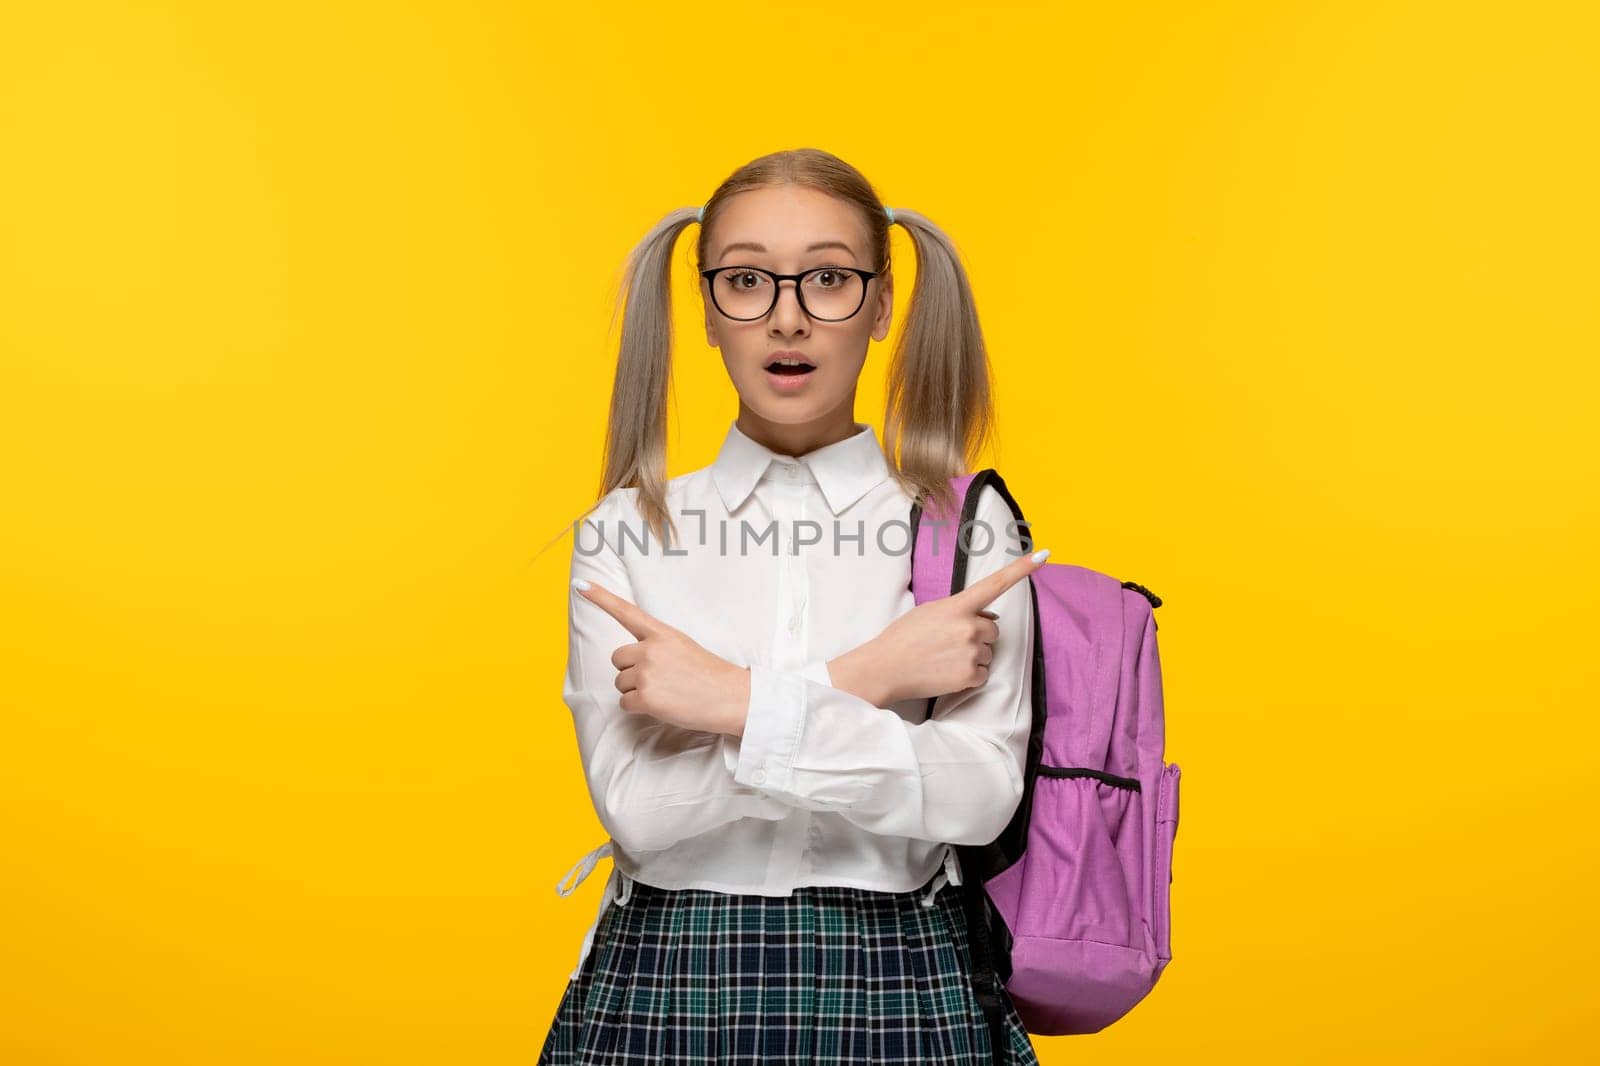 world book day blonde girl surprised in school uniform wearing glasses hands crossed by Kamran